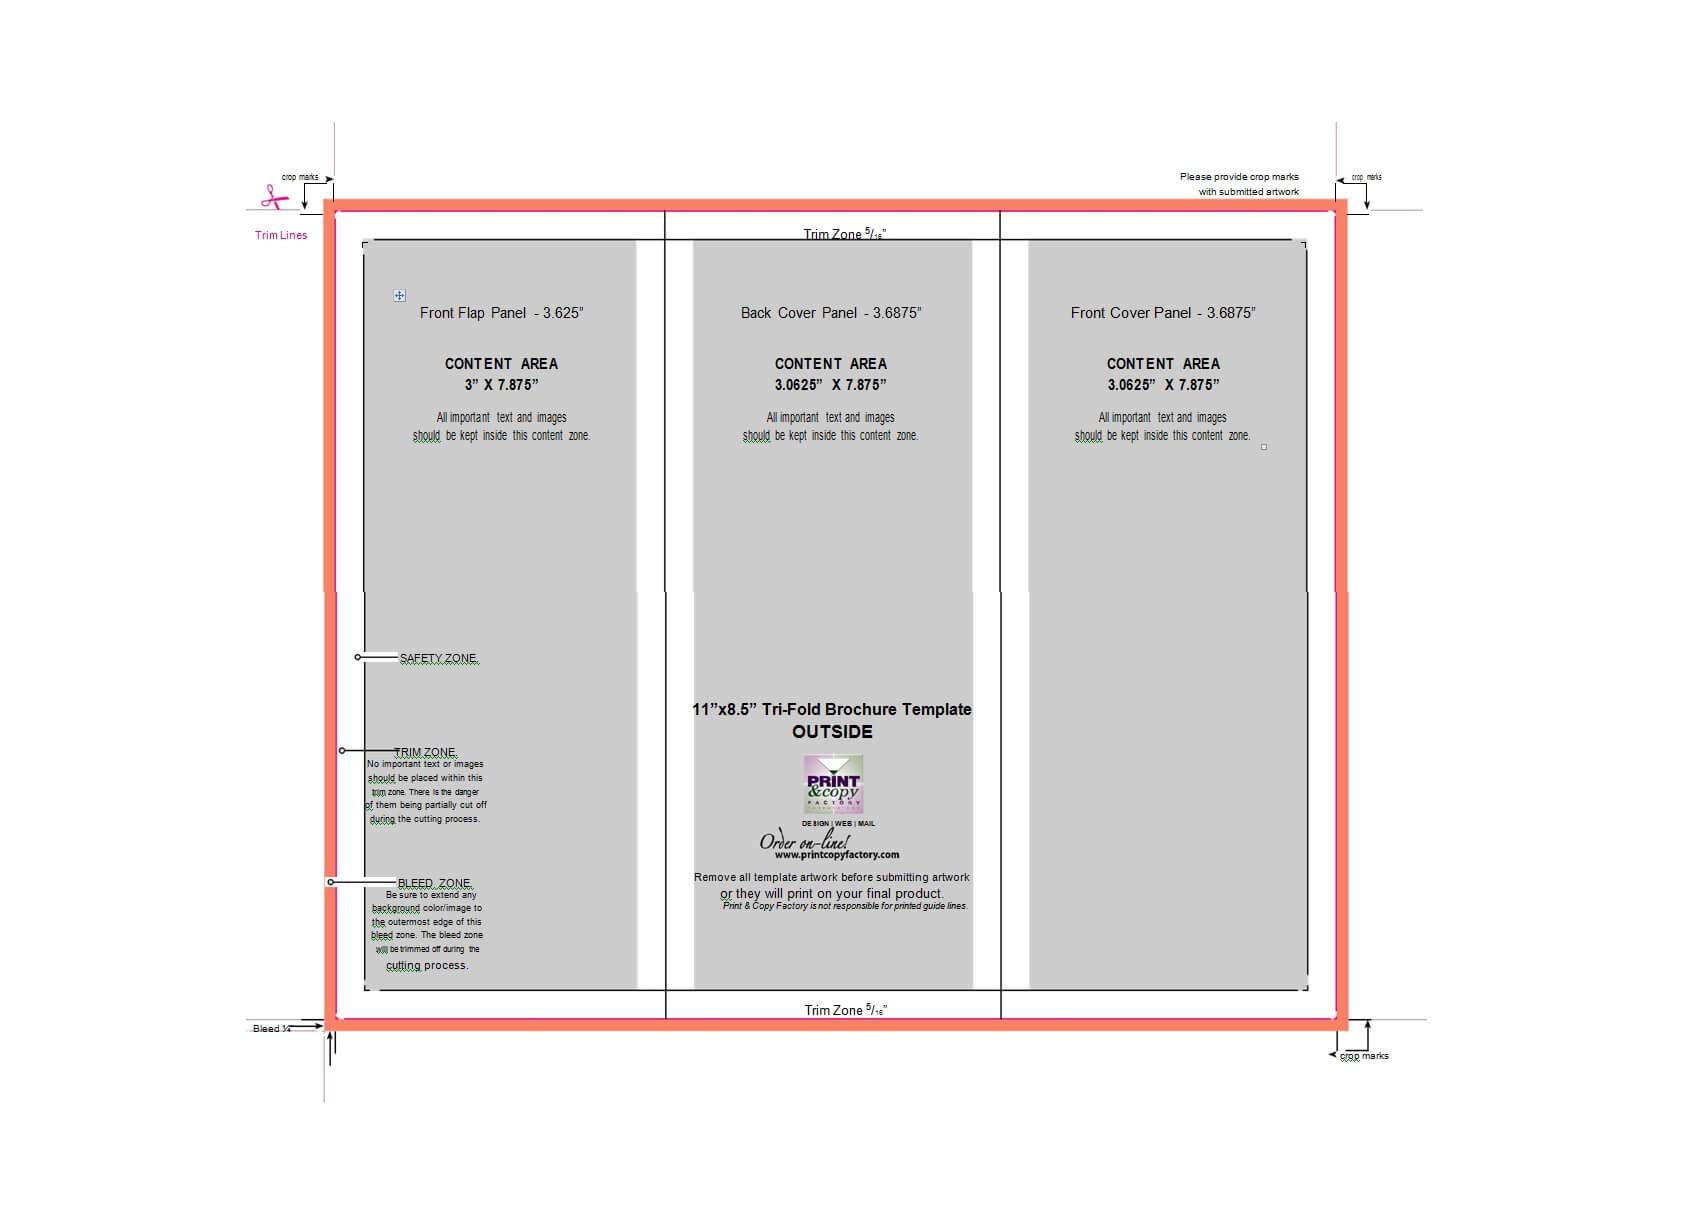 50 Free Pamphlet Templates [Word / Google Docs] ᐅ Templatelab With Regard To Tri Fold Brochure Template Google Docs